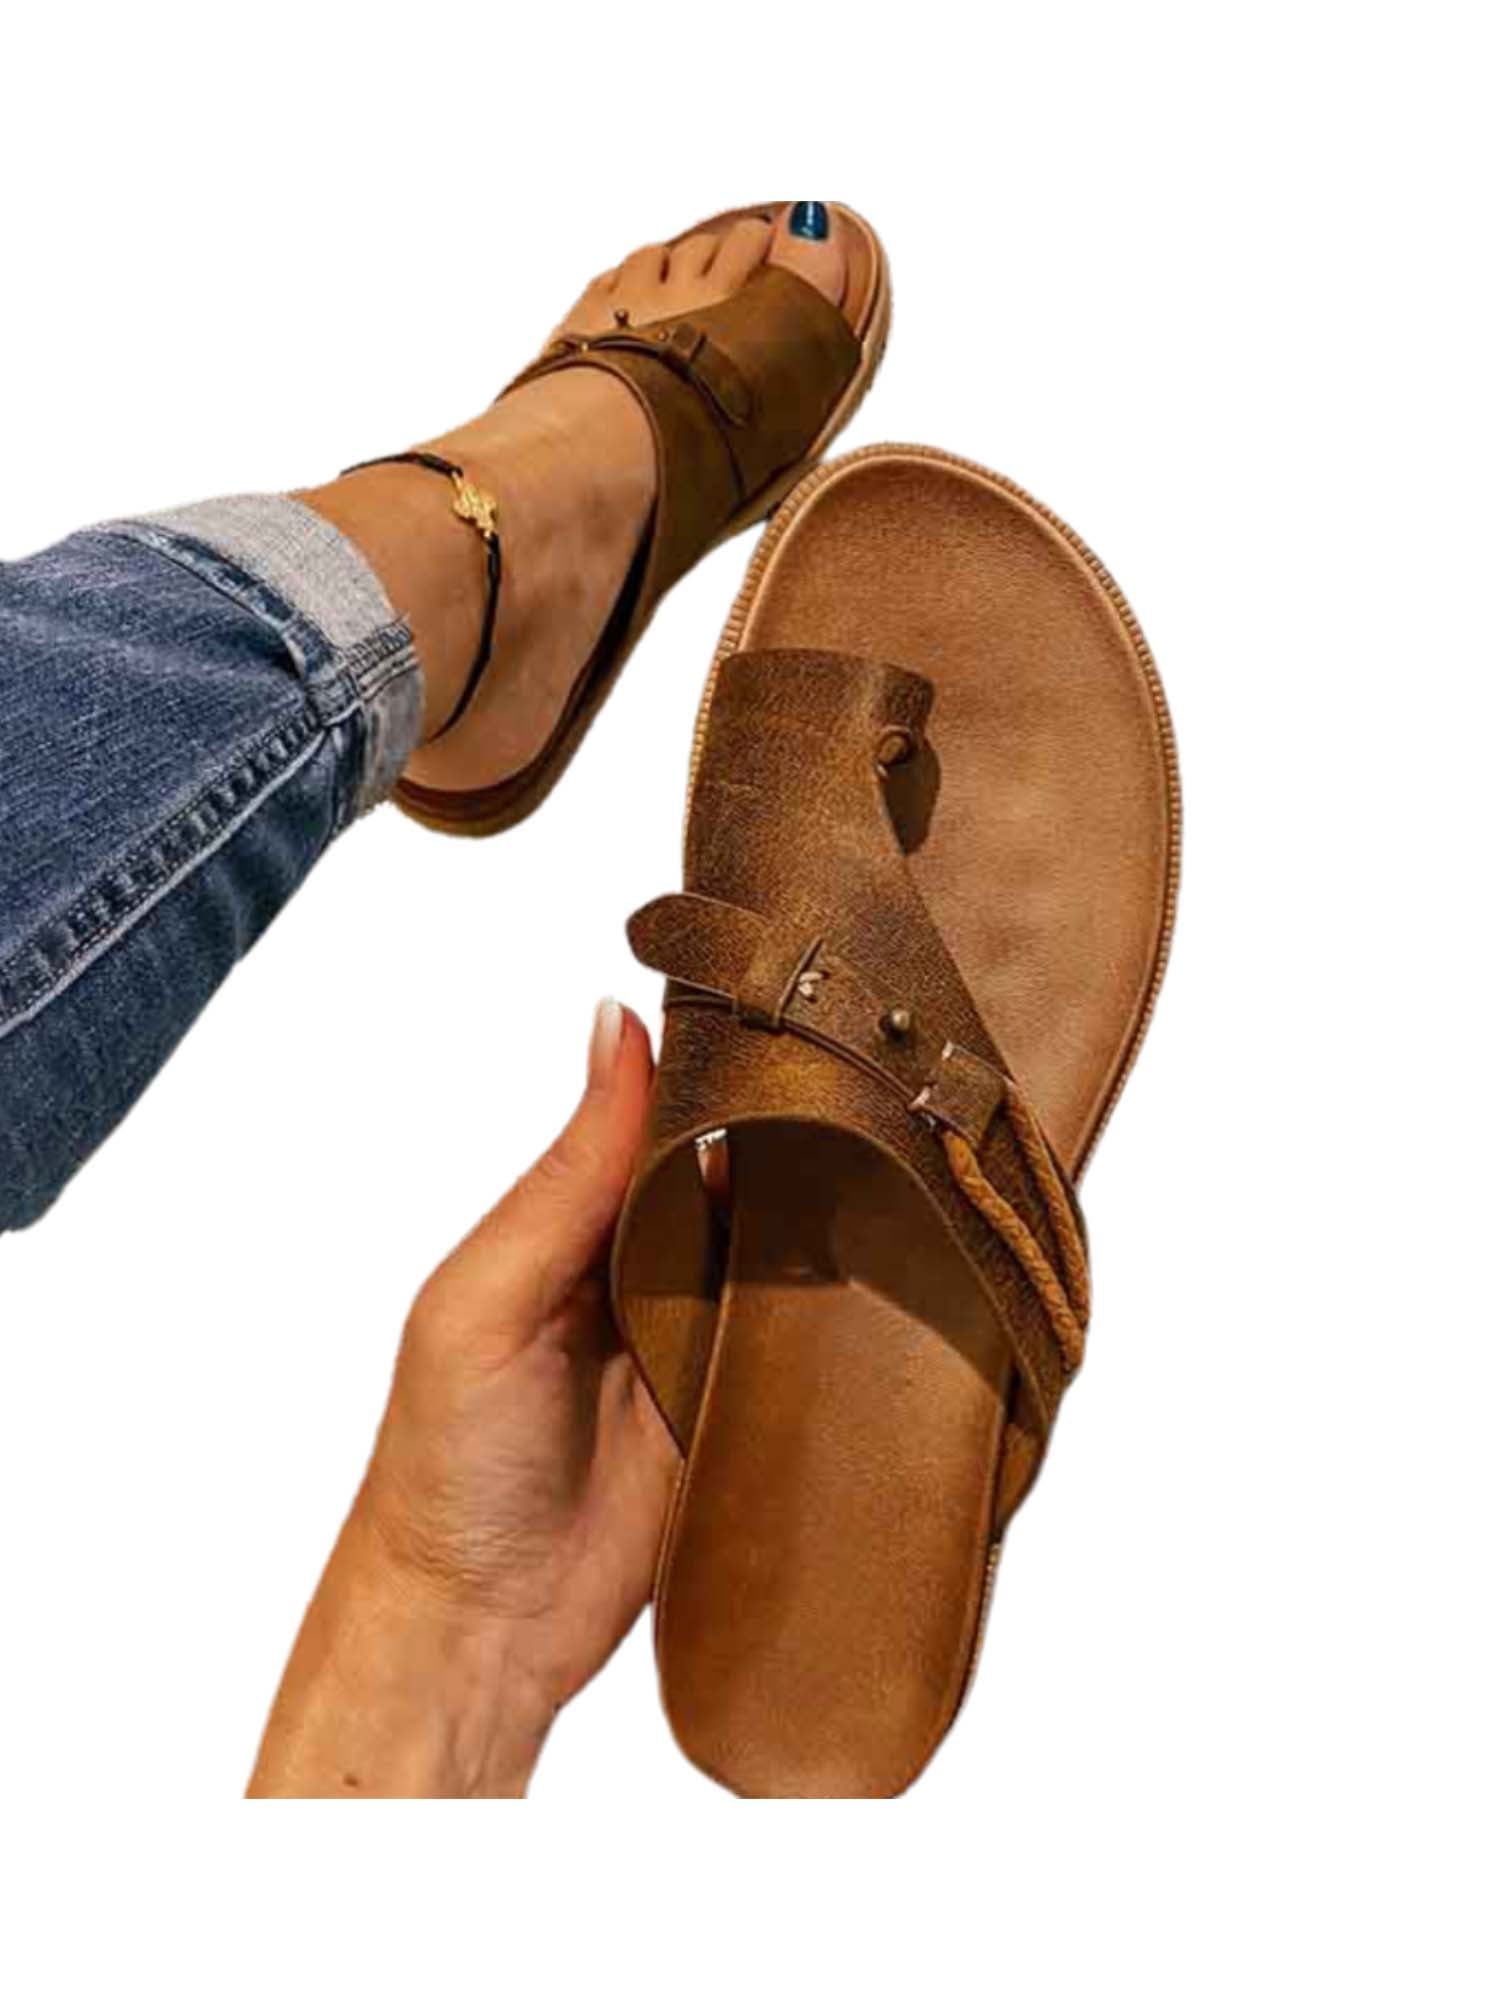 Womens Buckle Comfy Sandals Ladies Summer Flip Flops Bunion Corrector Shoes Size 